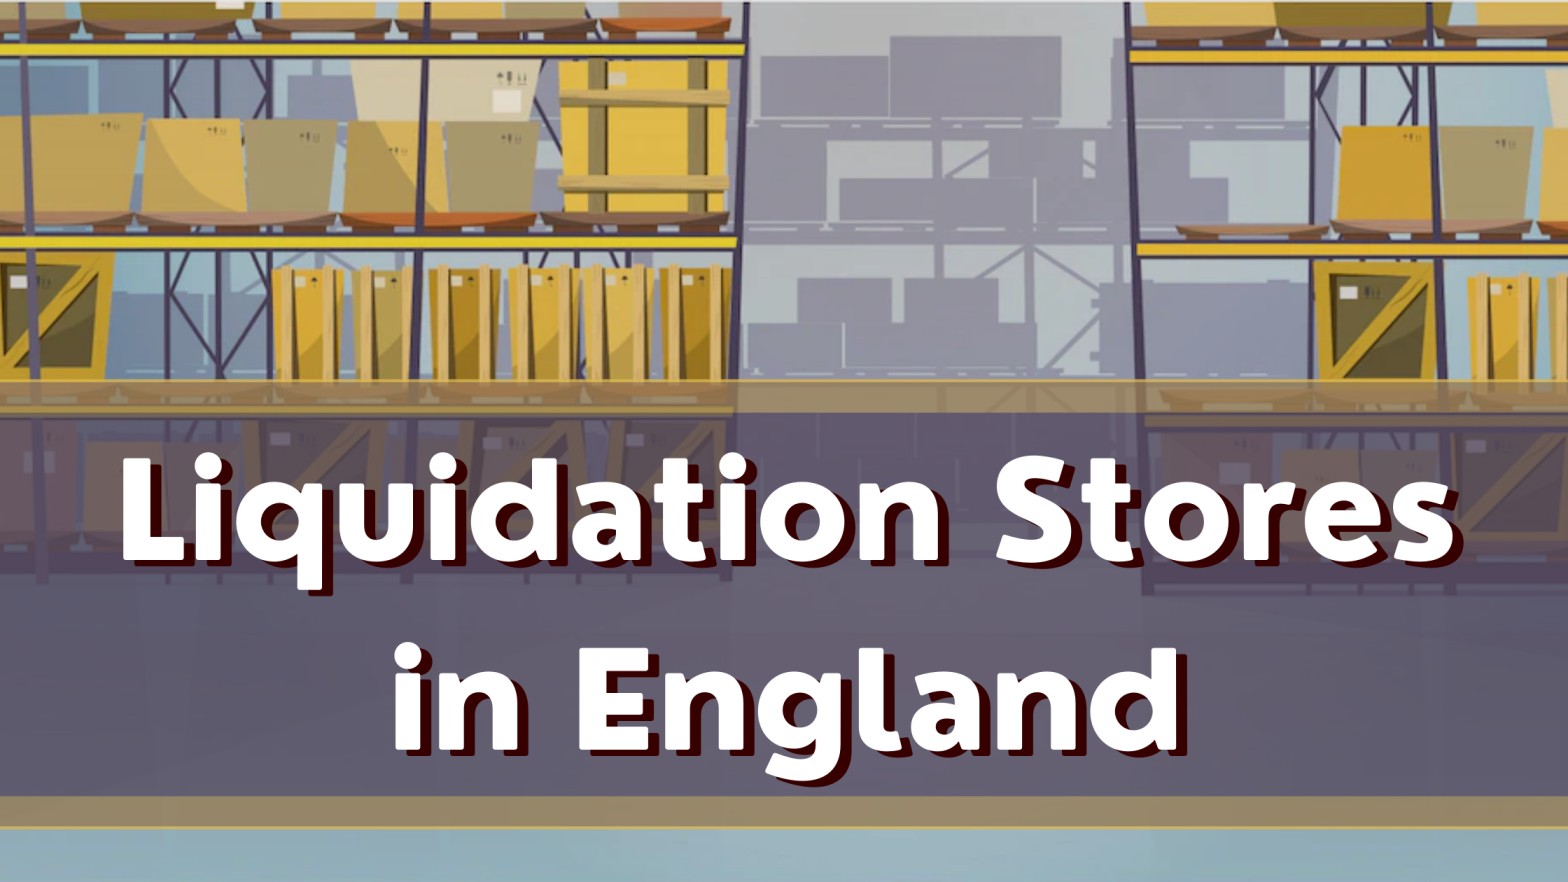 Liquidation Stores in England